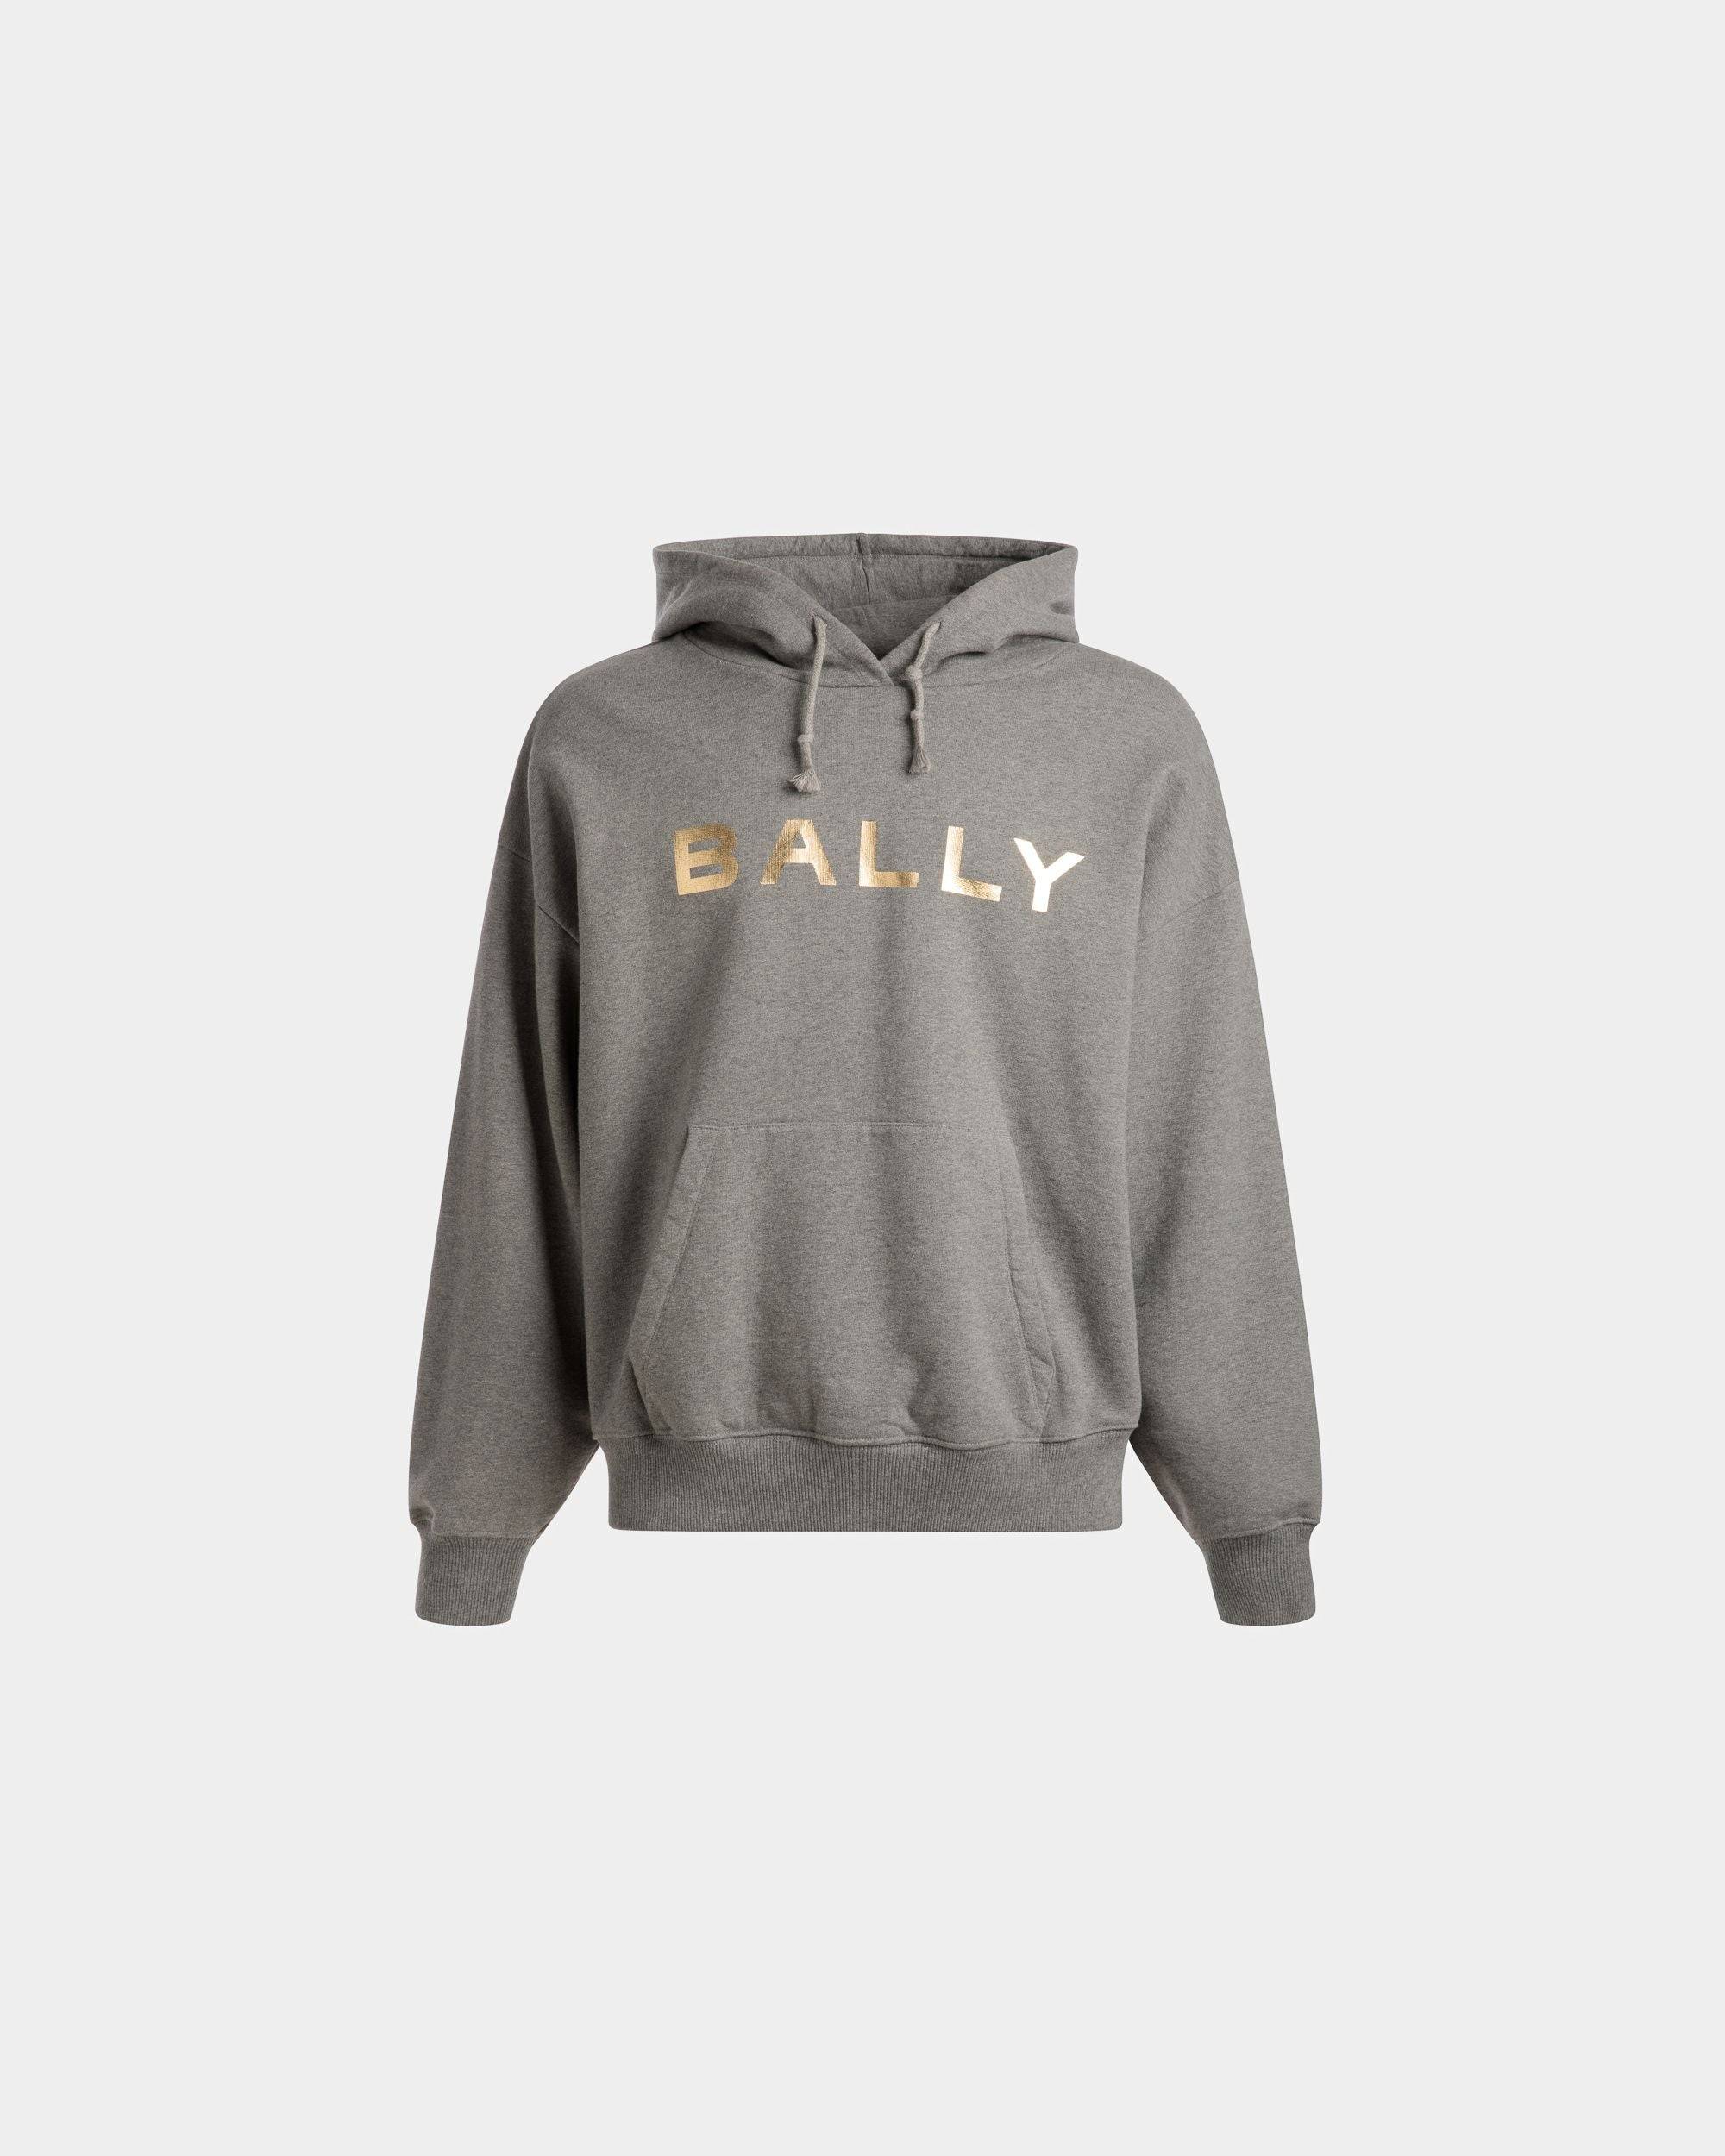 Men's Logo Hooded Sweatshirt In Grey Melange Cotton | Bally | Still Life Front